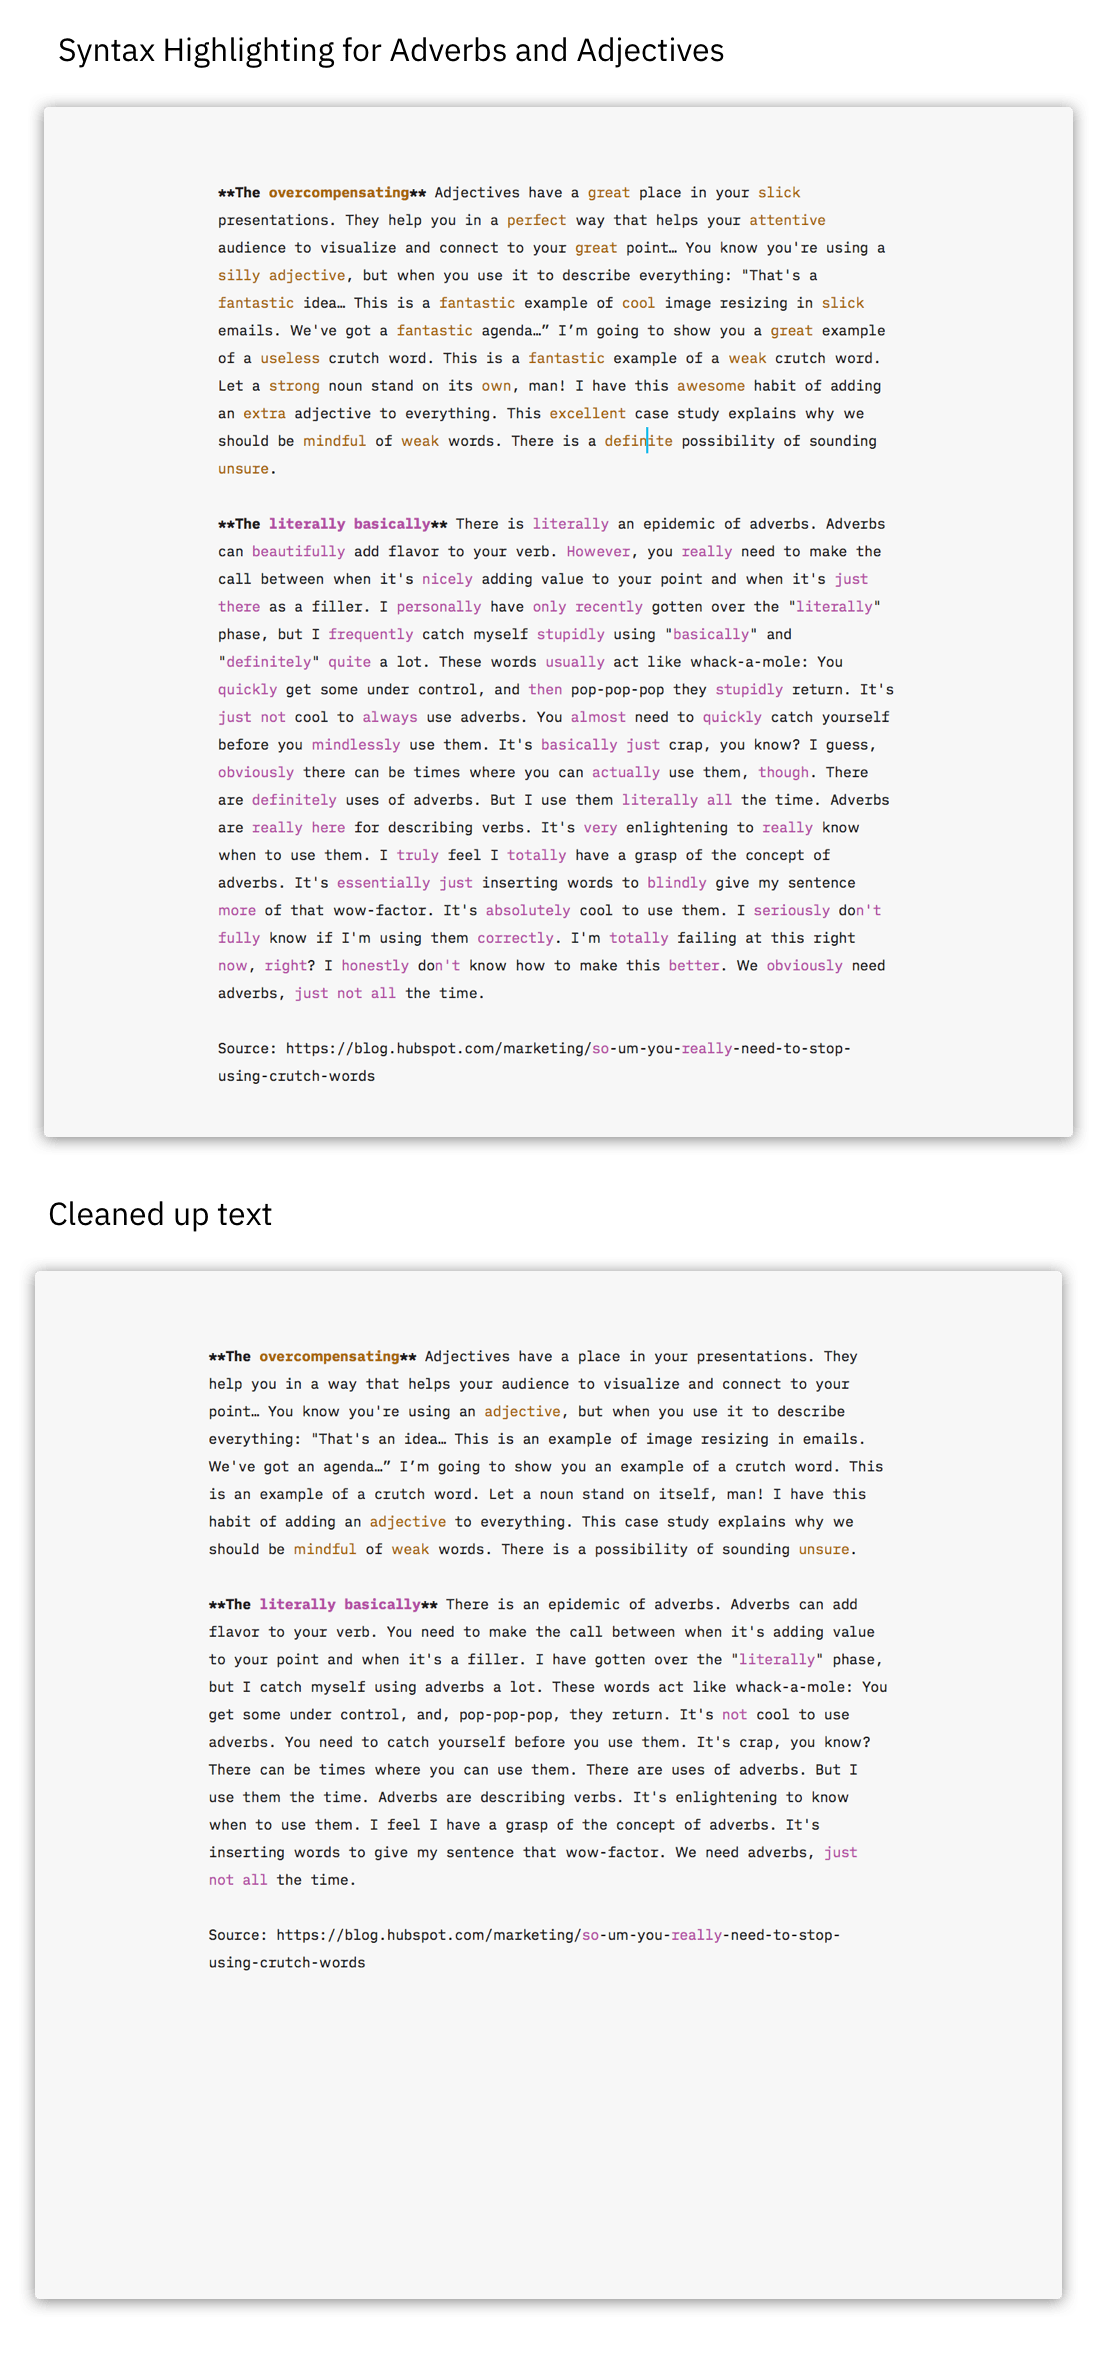 Comparing Focus Mode in Microsoft Word with iA Writer’s original Focus Mode